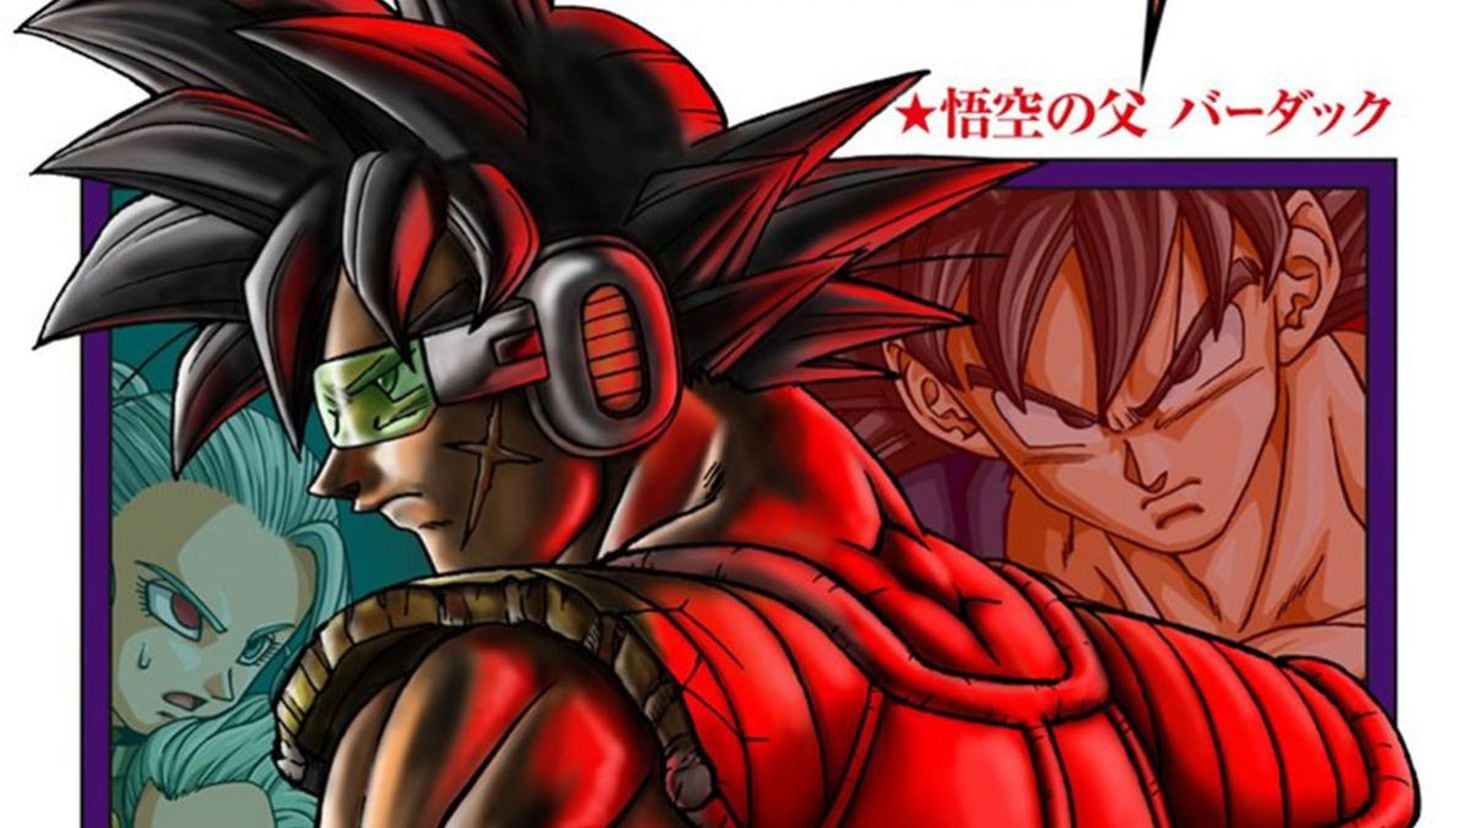 Dragon Ball Super Bardock Stars On The Spectacular Cover Of Manga Volume Meristation